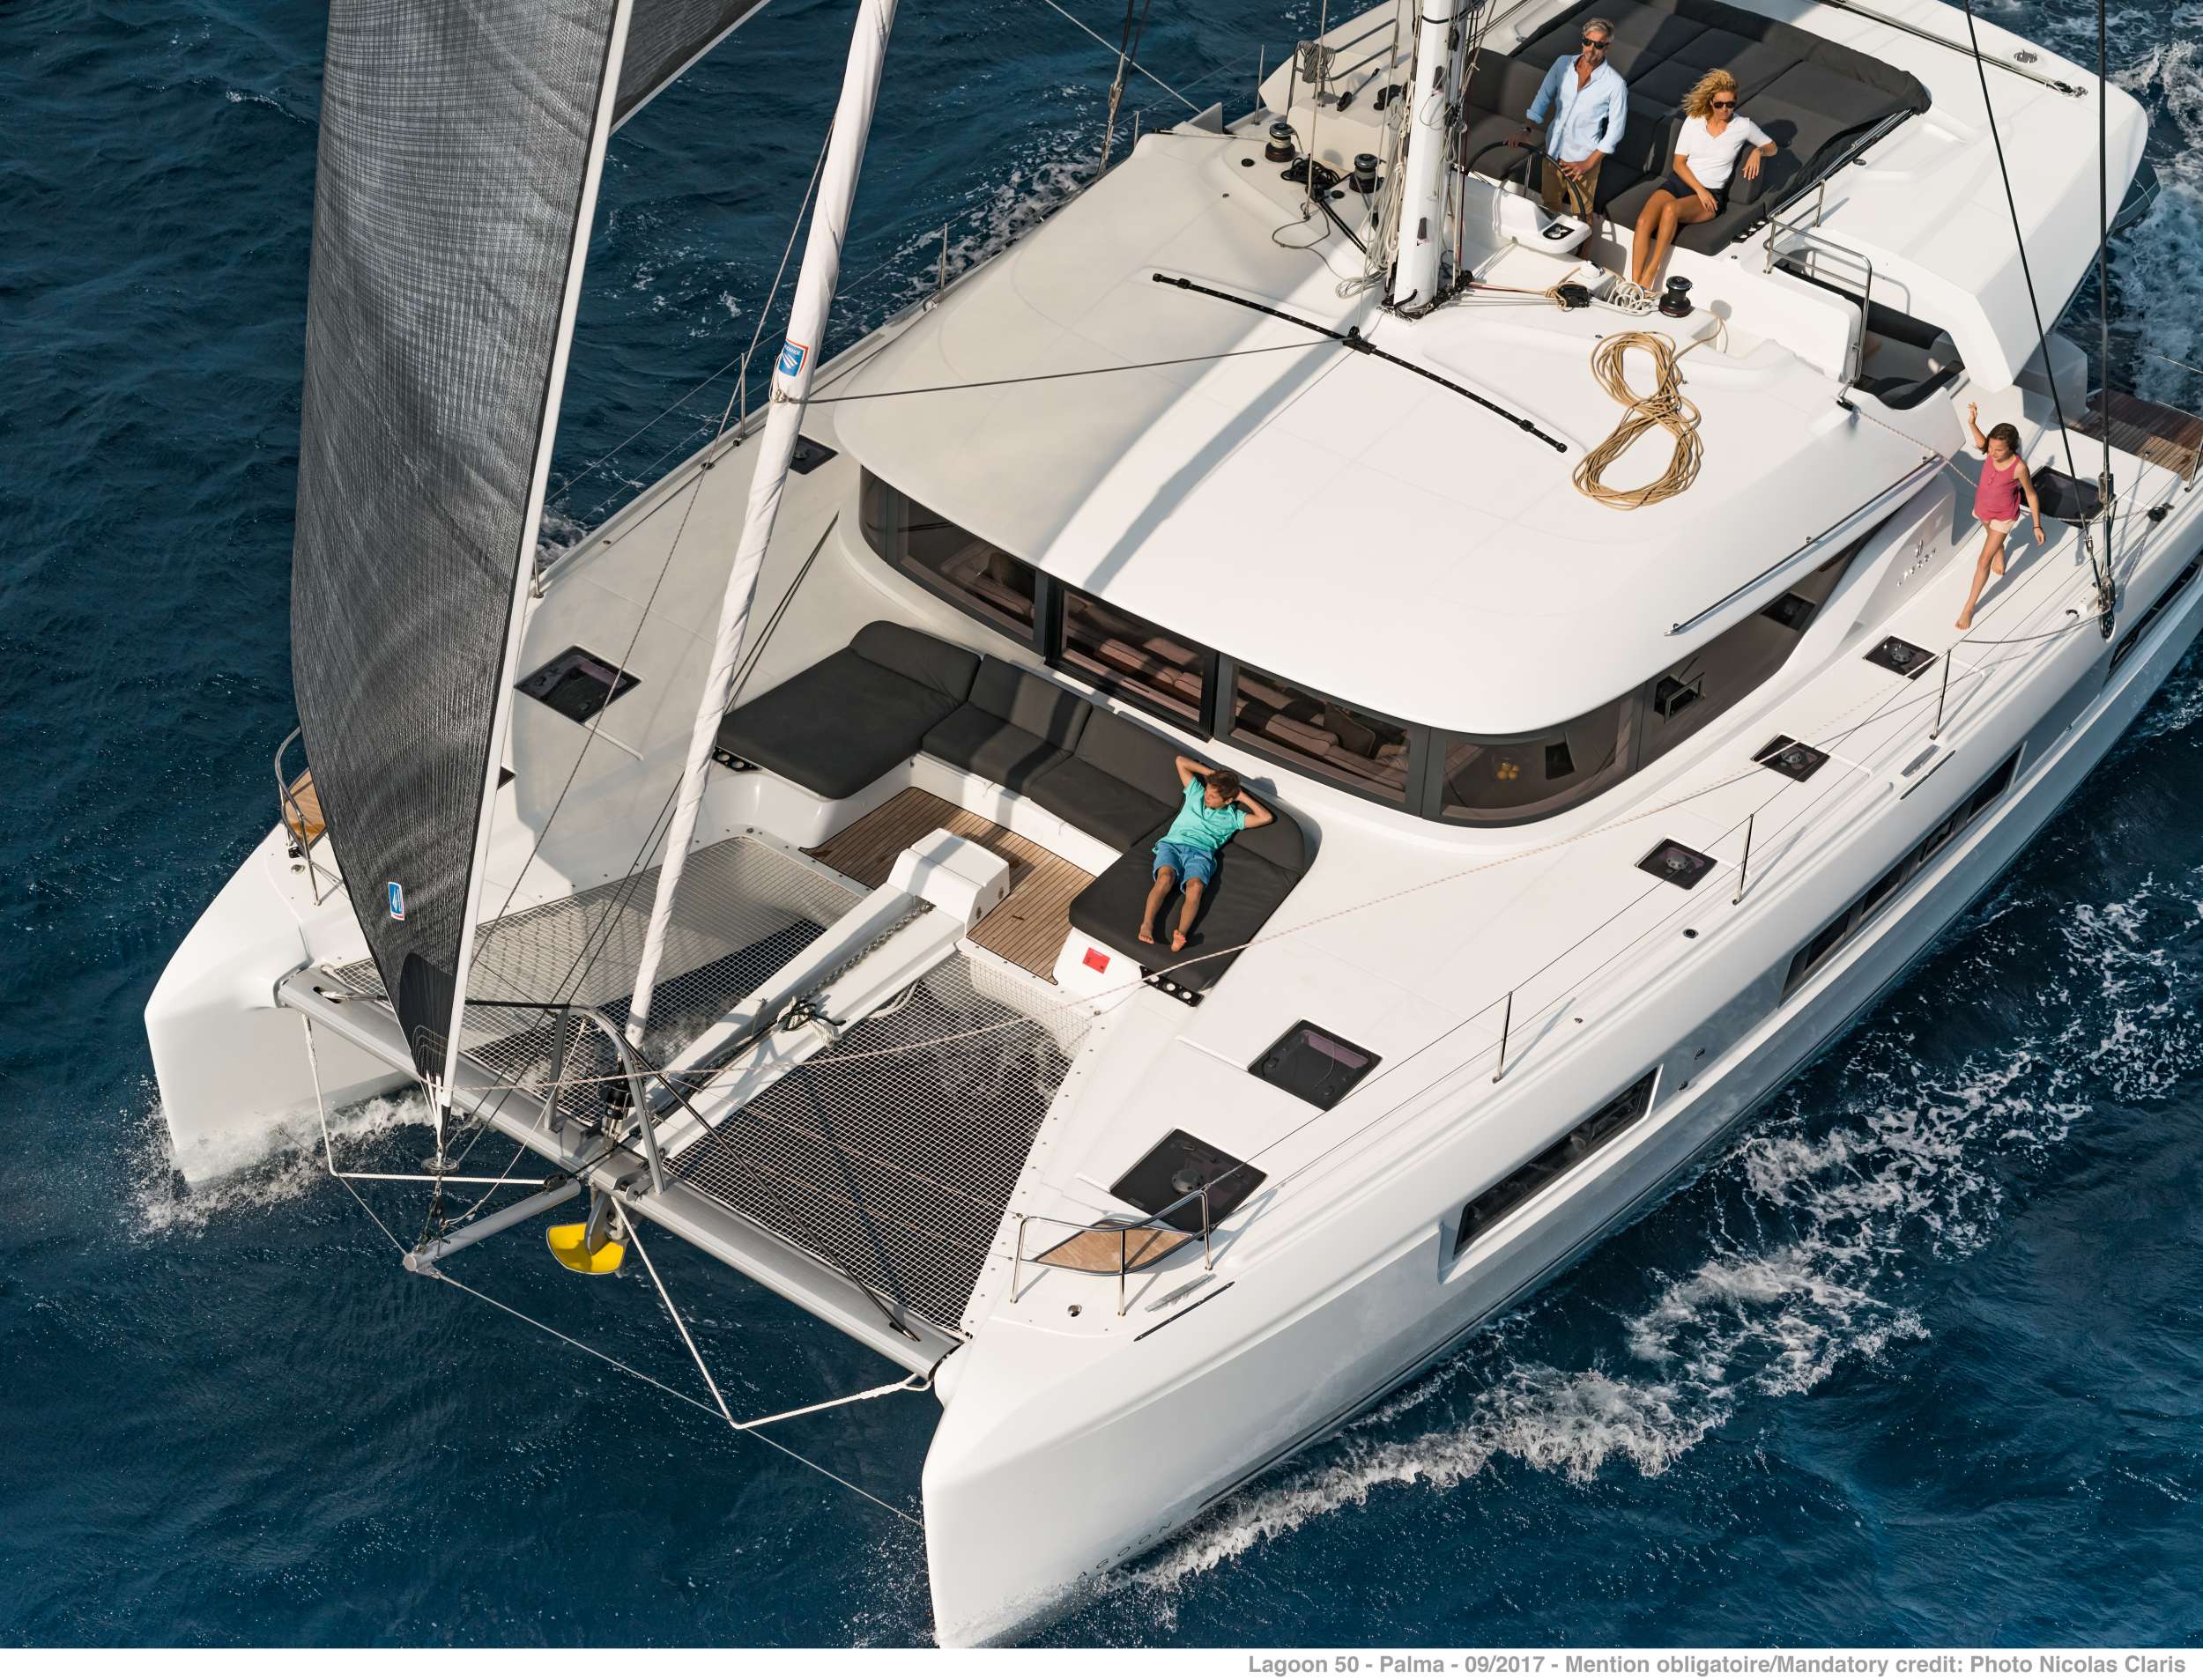 ONEIDA 2 - Yacht Charter Thasos & Boat hire in Greece 6